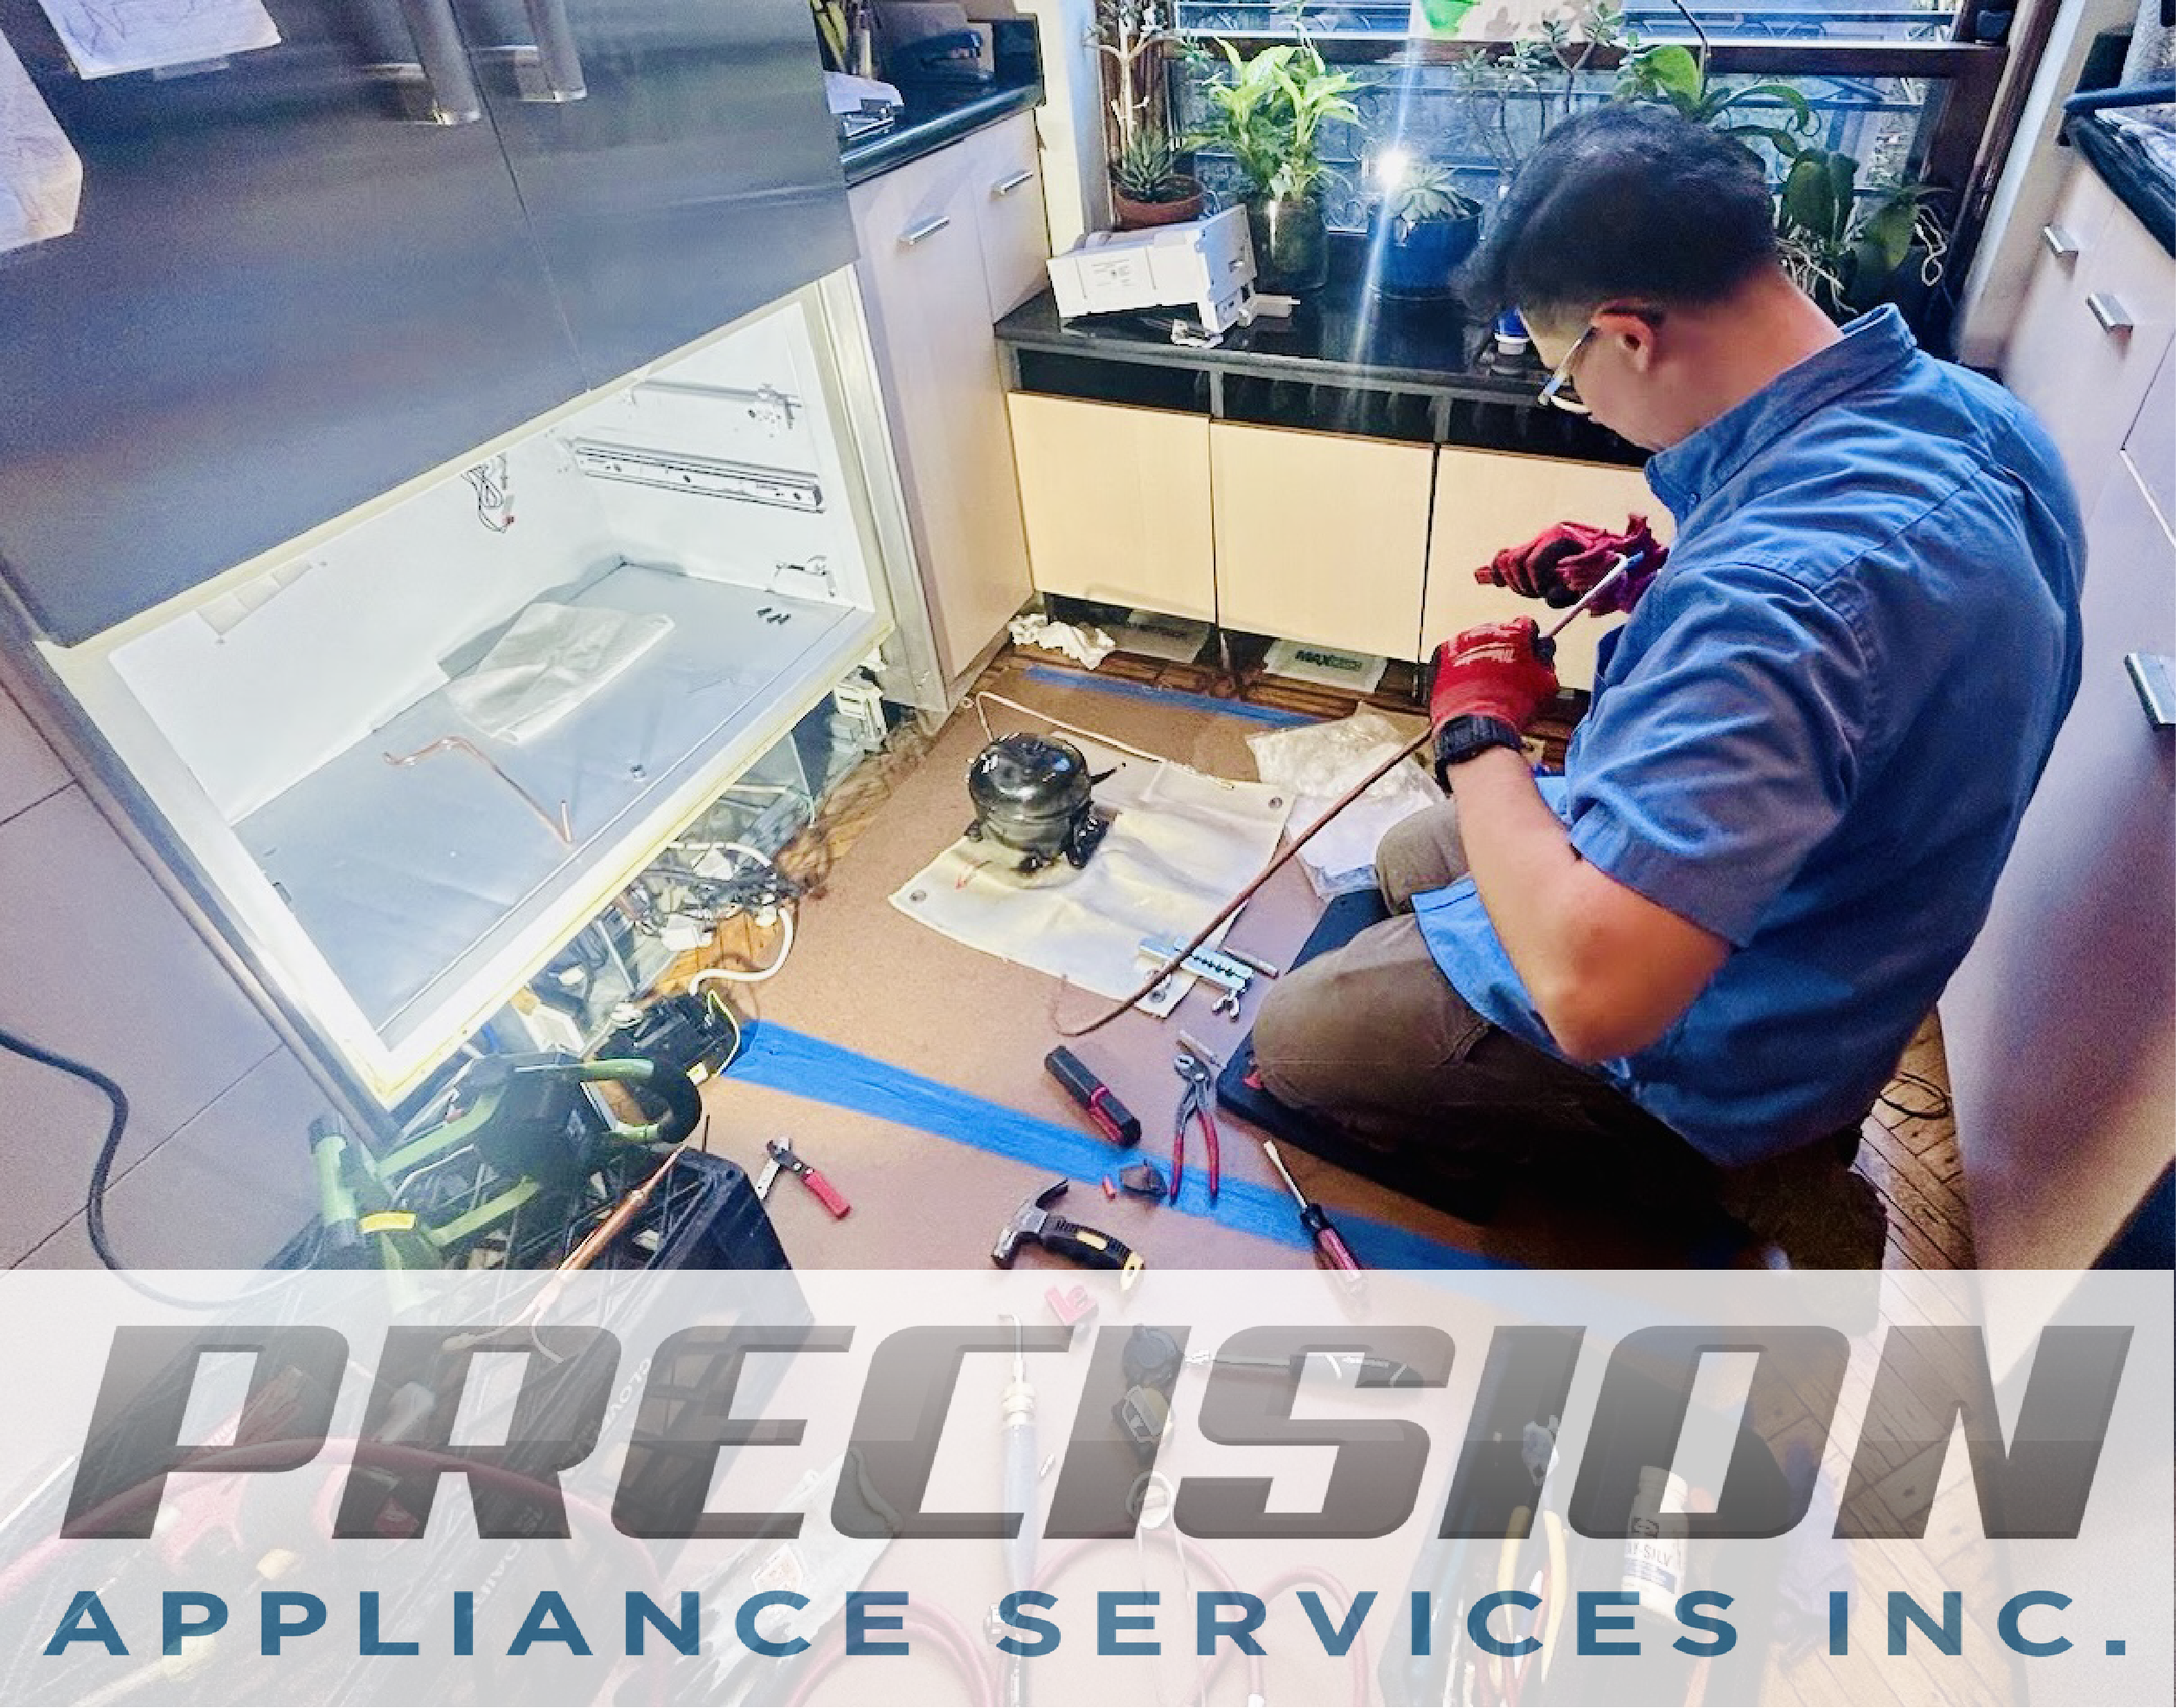 John Telepan  Luxury Appliance Repair Expert  NYC  Precision Appliance Services Inc